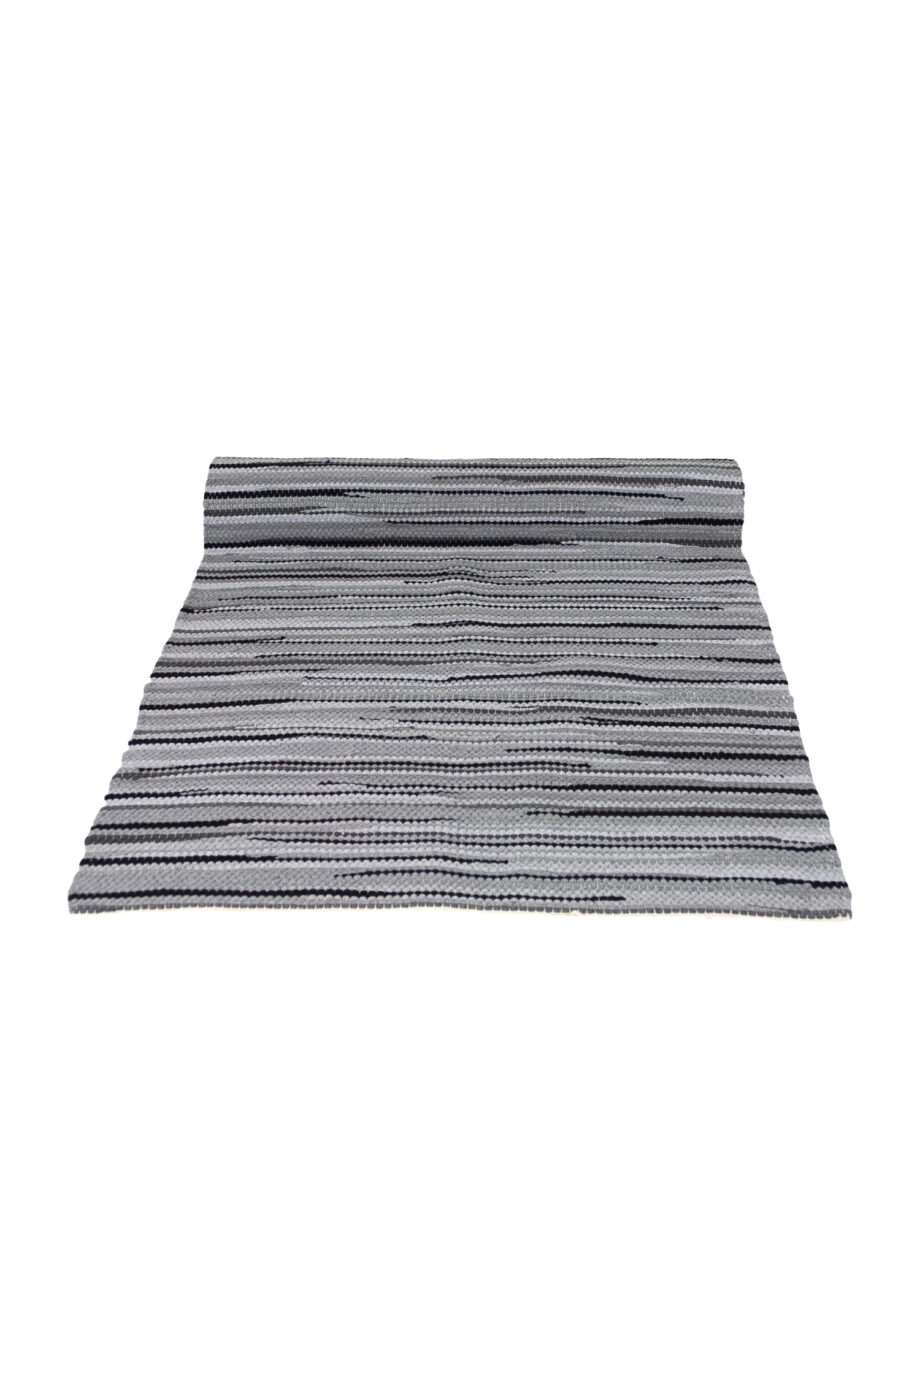 stripy grey woven cotton floor runner large